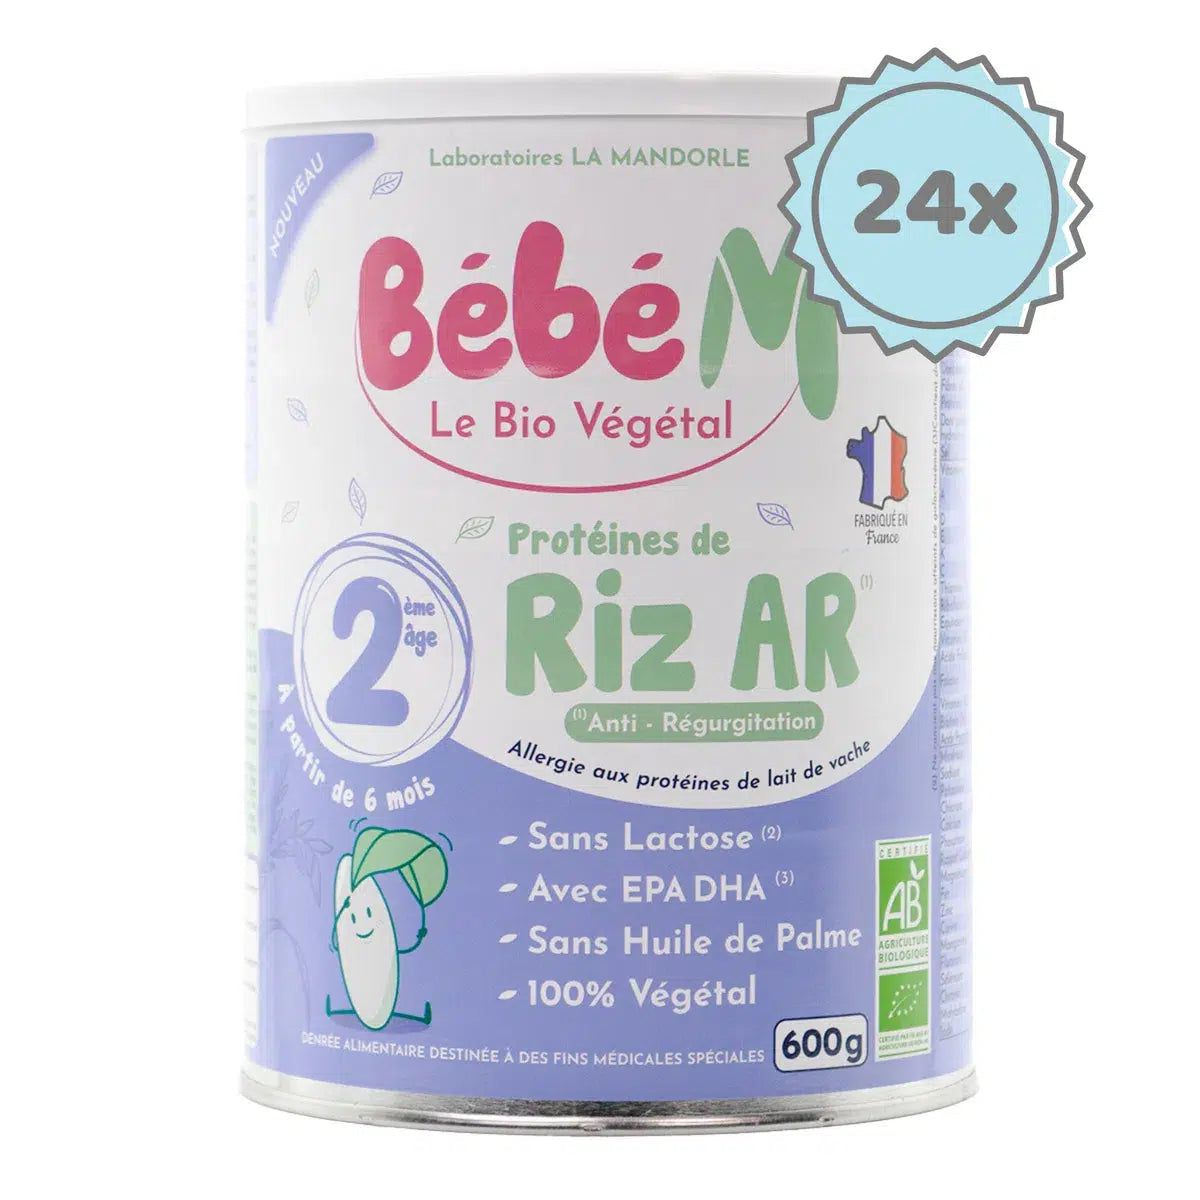 Bebe M (Bebe Mandorle) Organic Anti-Reflux Rice-Based Formula - Stage 2 (6+ months) | Organic Baby Formula | 24 cans